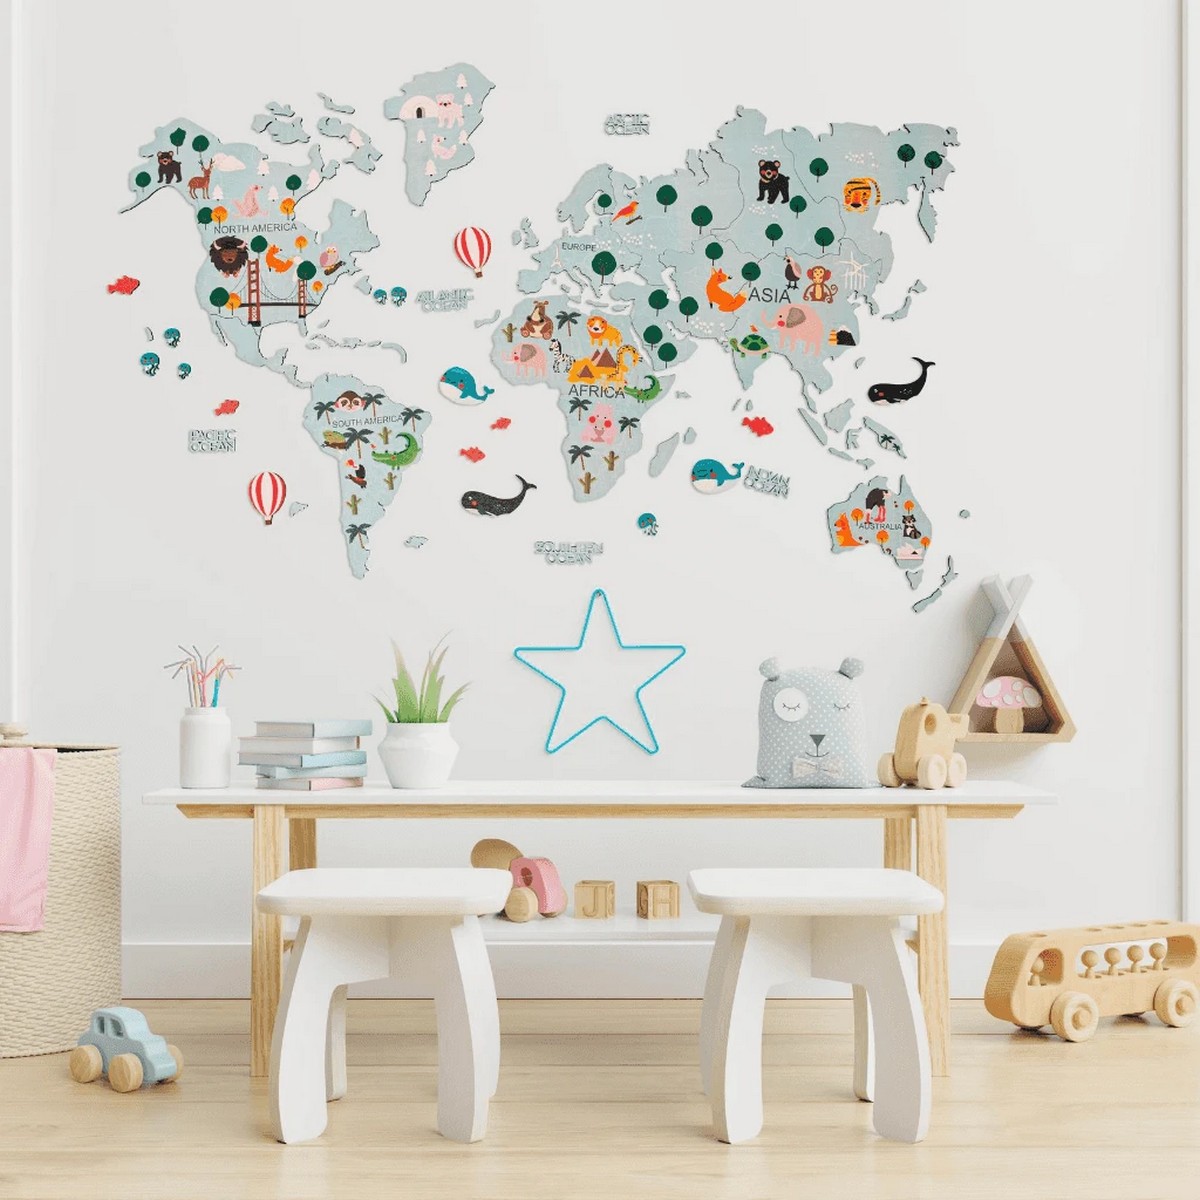 Мапа света за децу